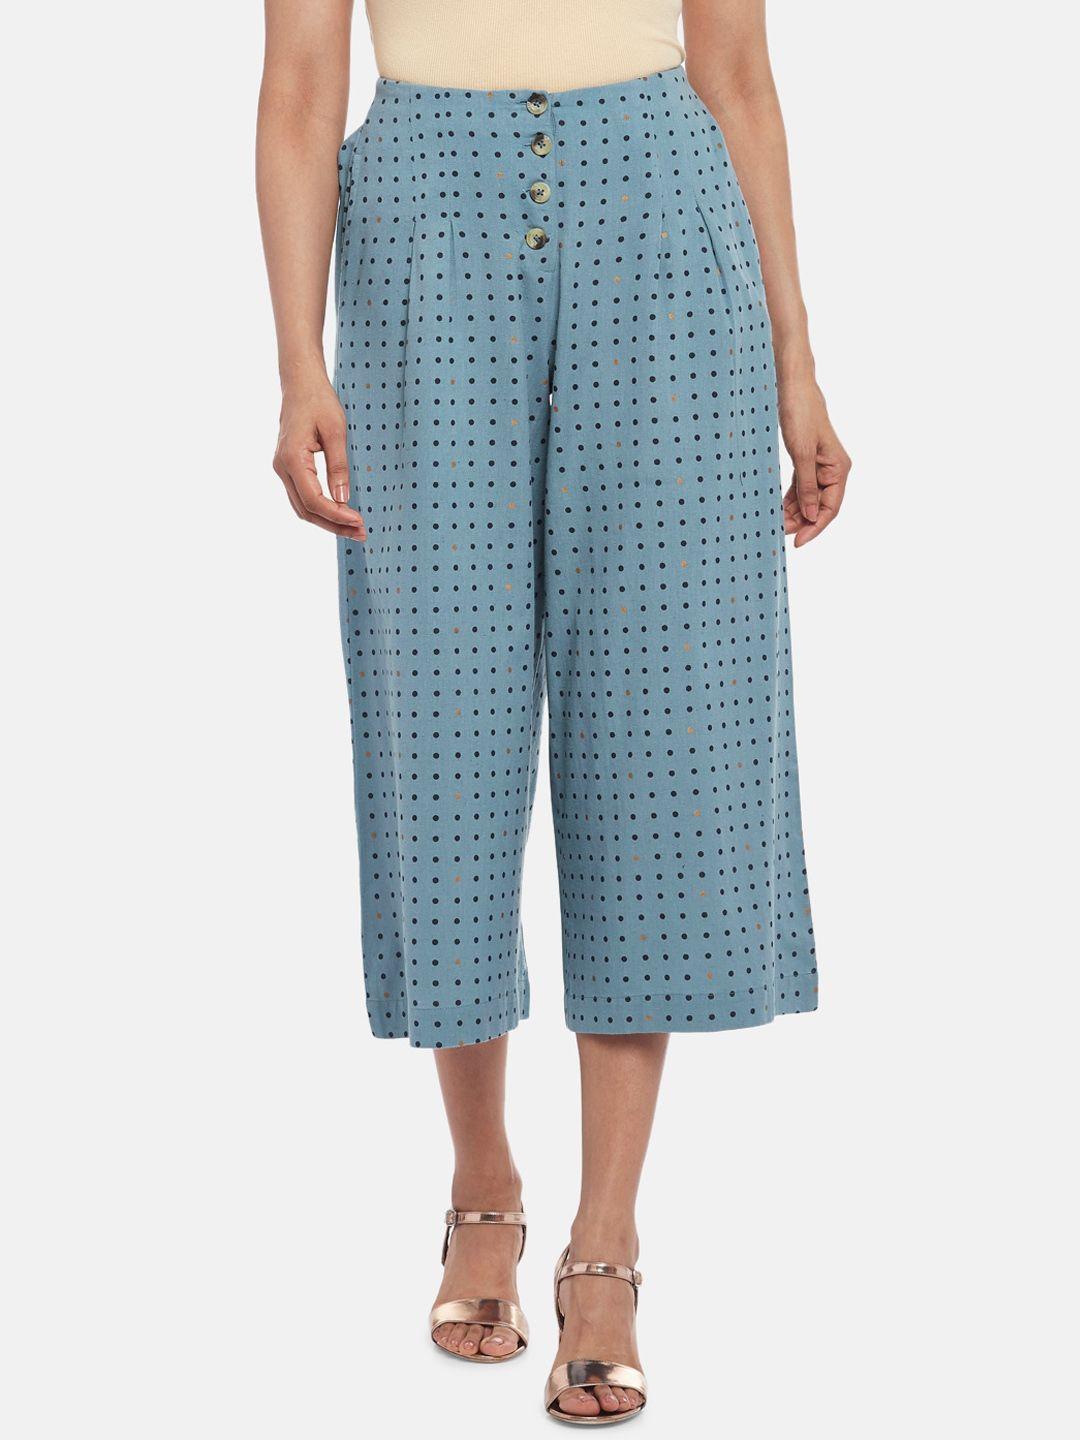 akkriti by pantaloons women blue printed culottes trouser